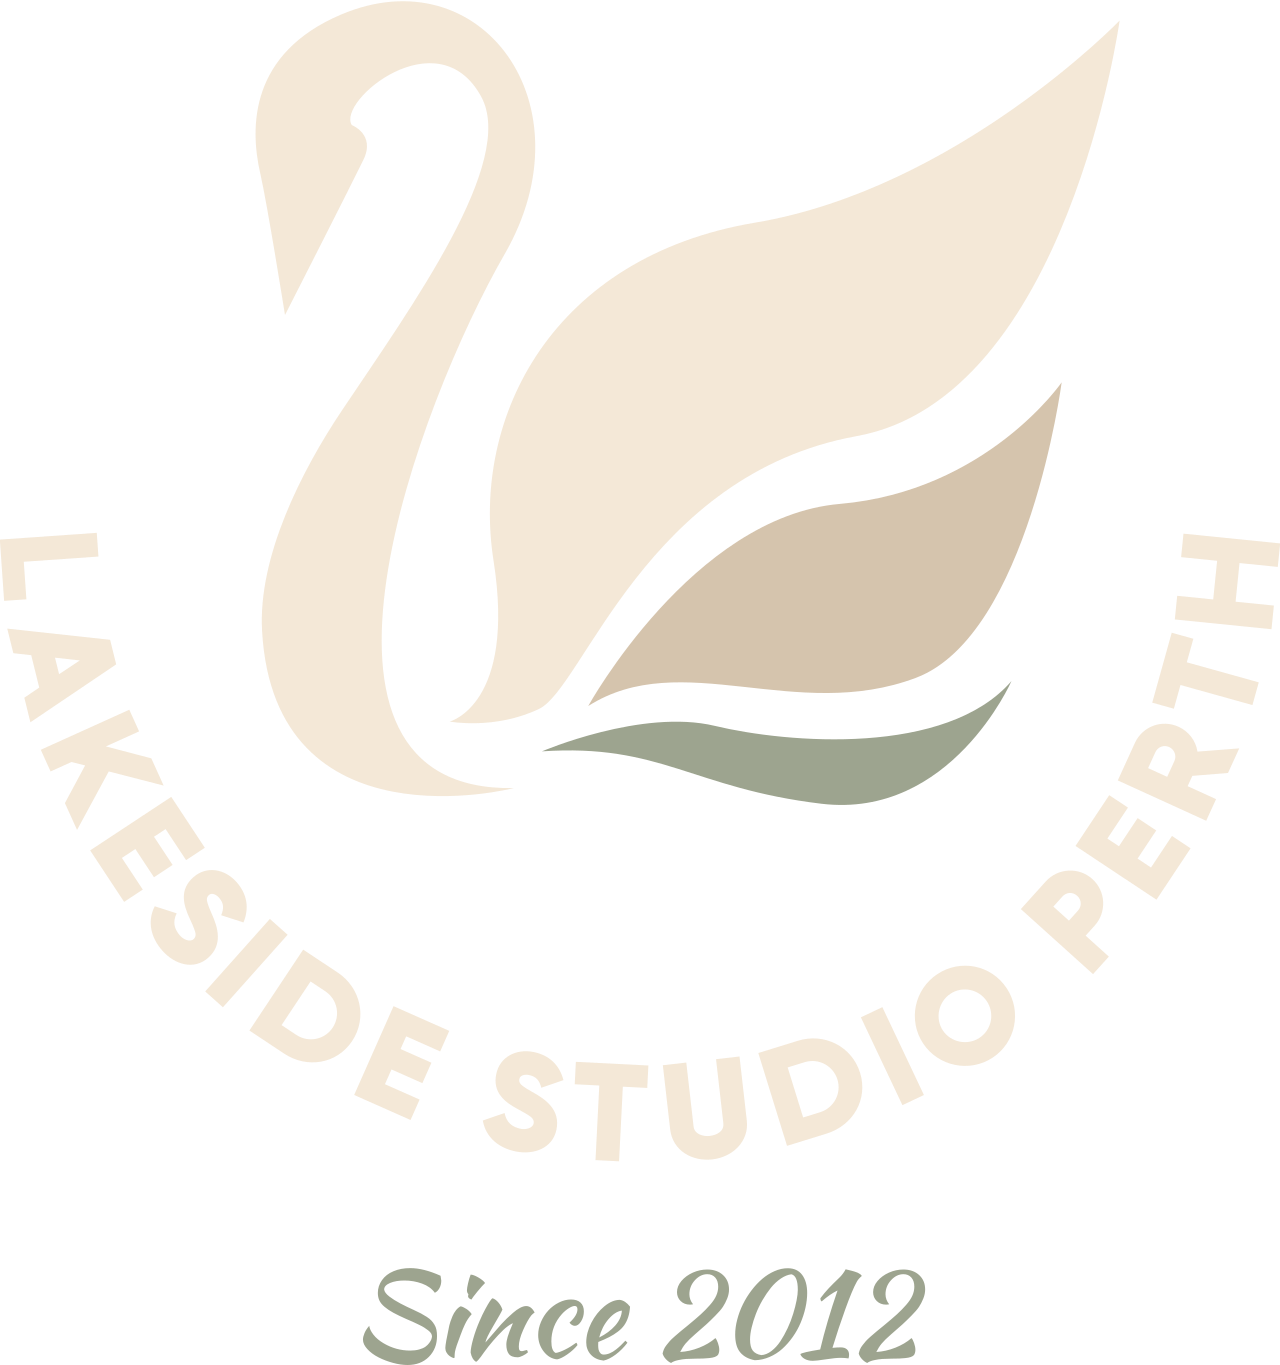 LAKESIDE Studio Perth's web page